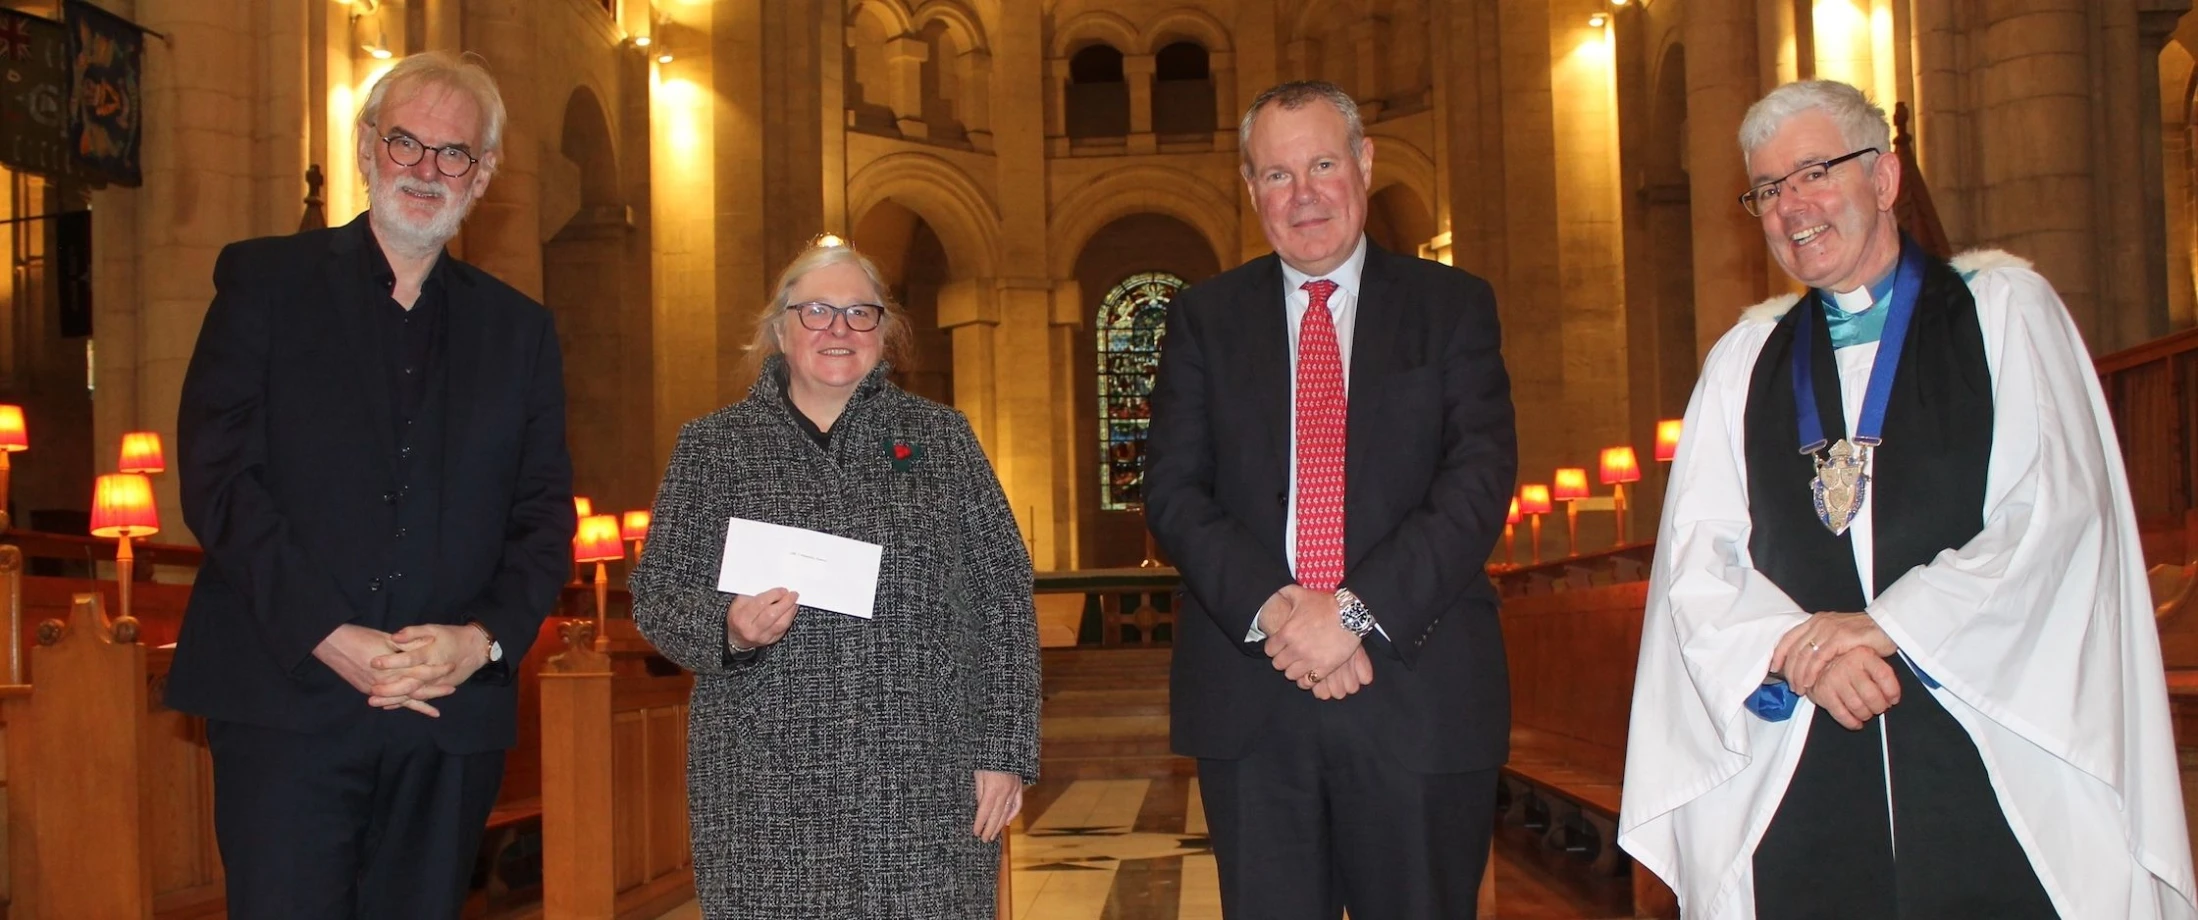 220 charities receive Black Santa funding at Cathedral